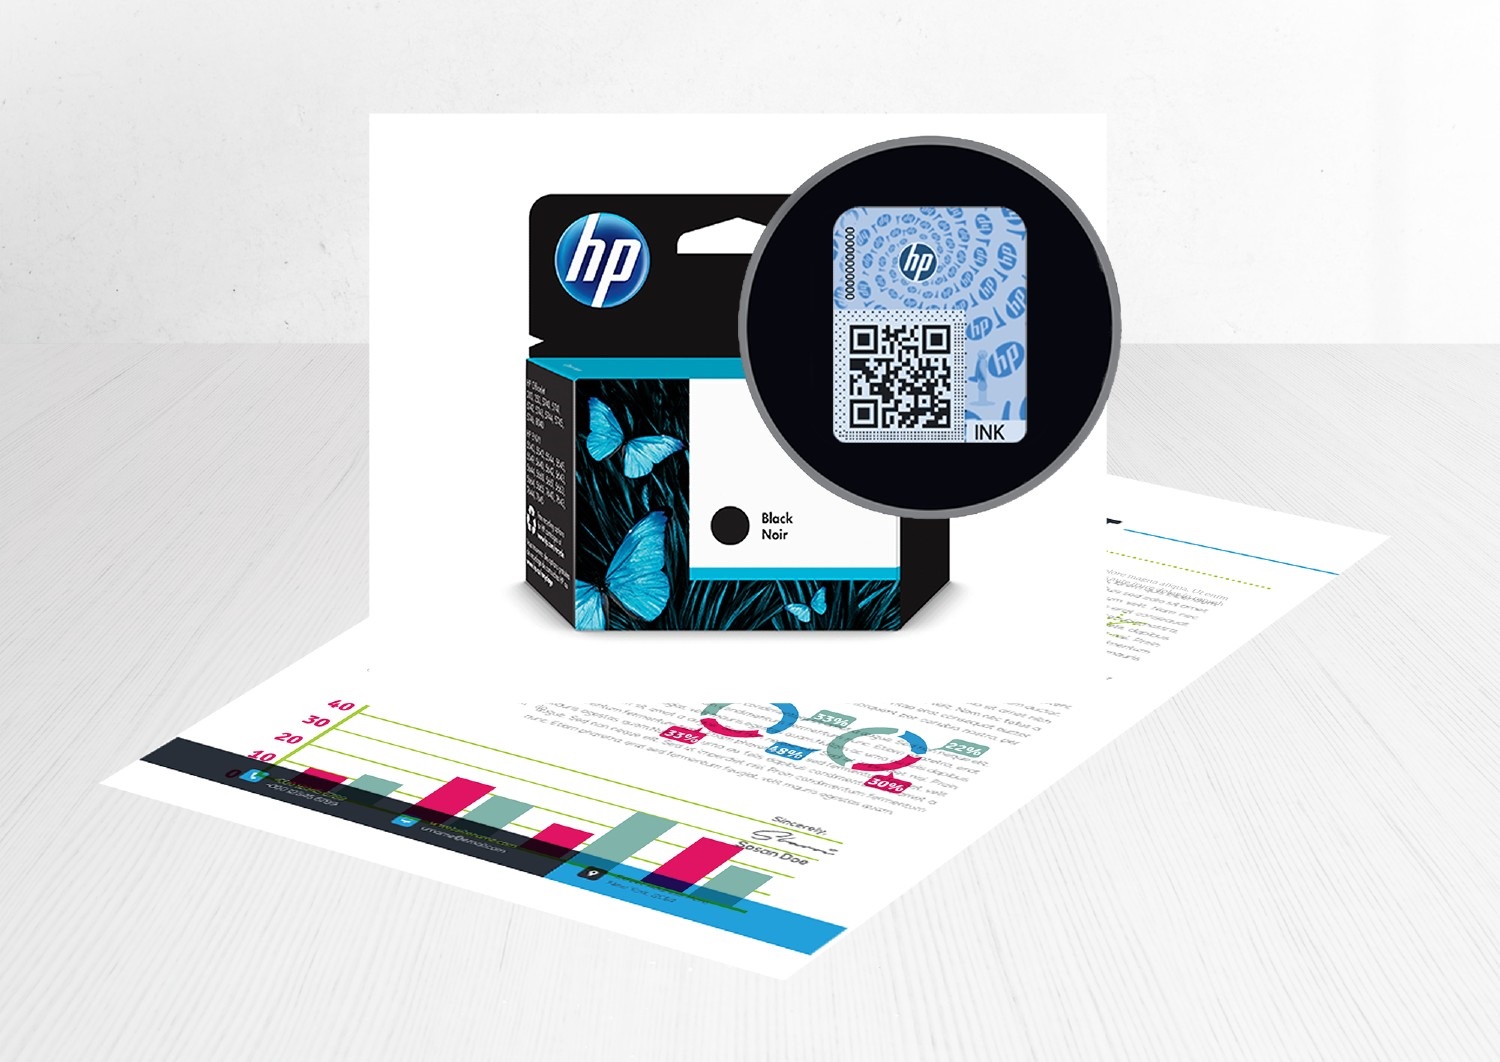 HP 651 | Originálna atramentová kazeta HP® | Ttrojfarebná | C2P11AE | 1 kus